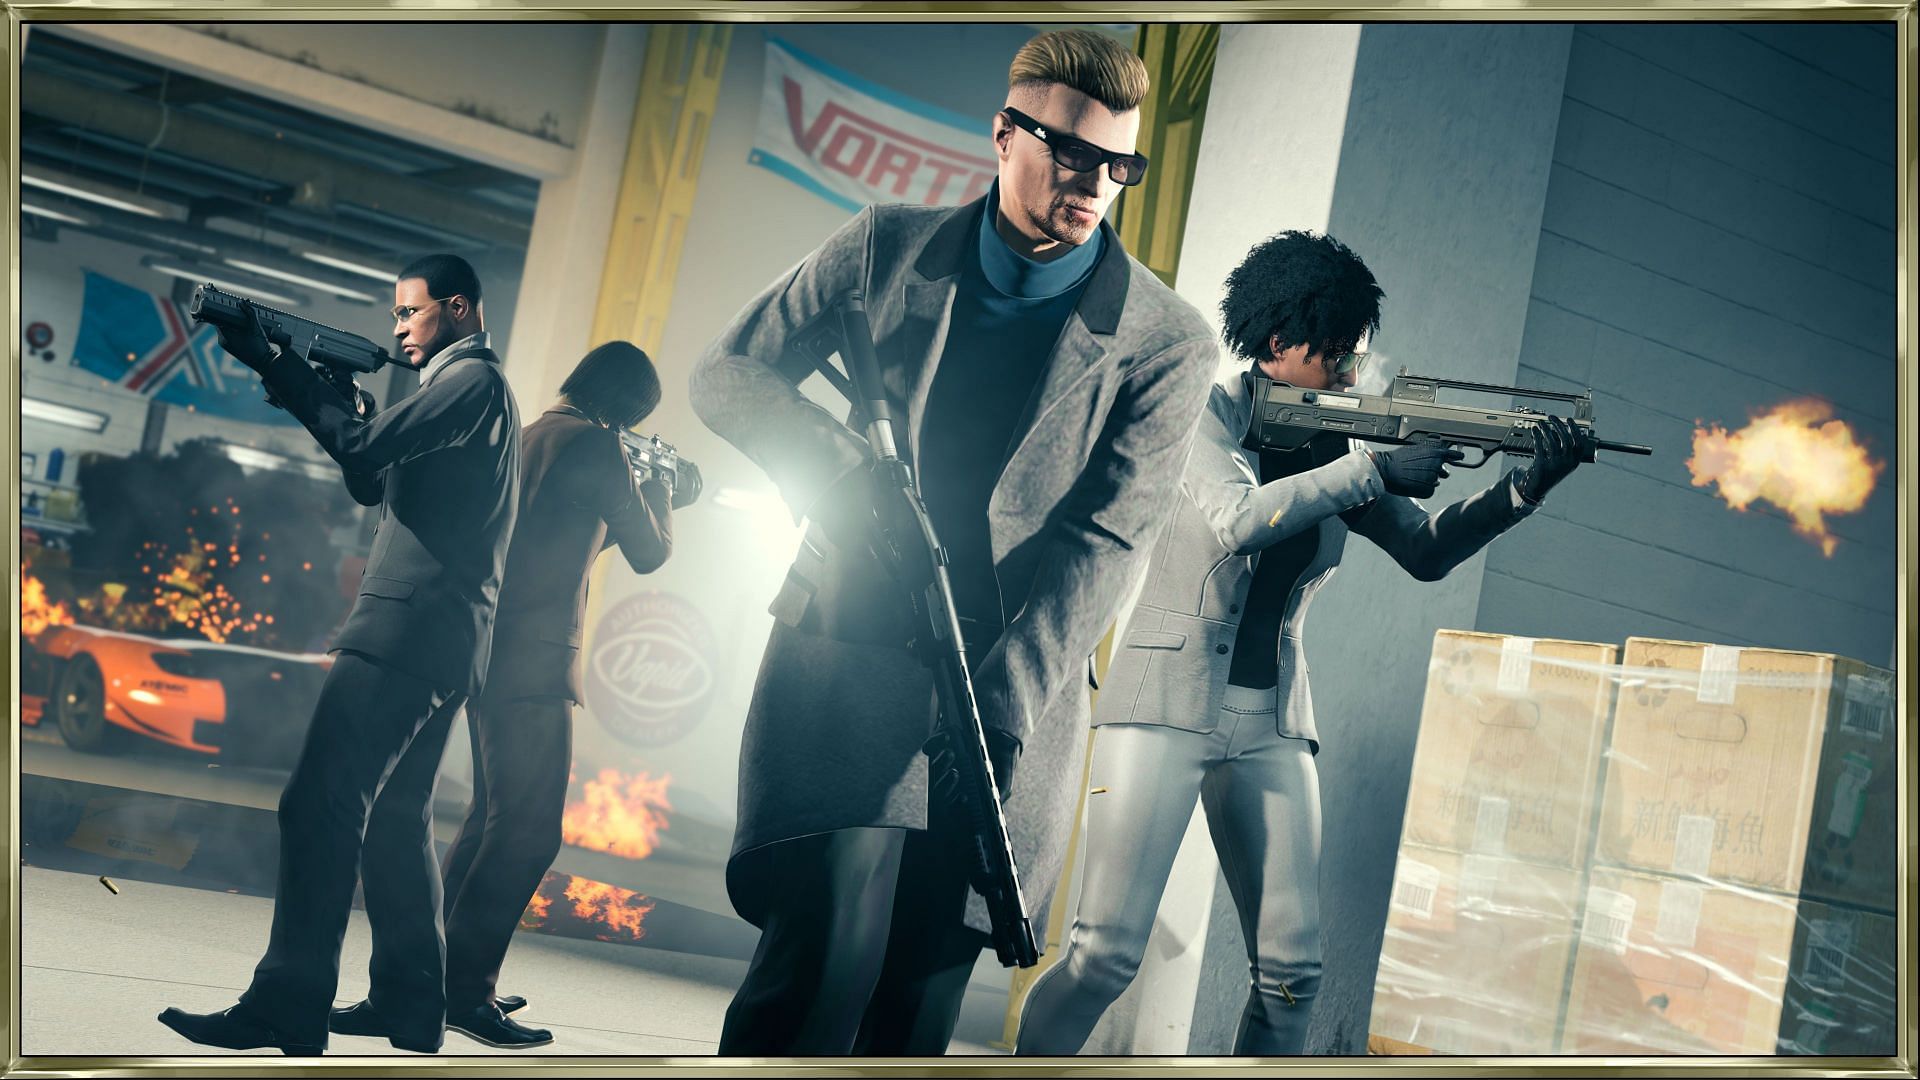 Rockstar Game adds new Freemode random event in GTA Online (Image via Rockstar Games)